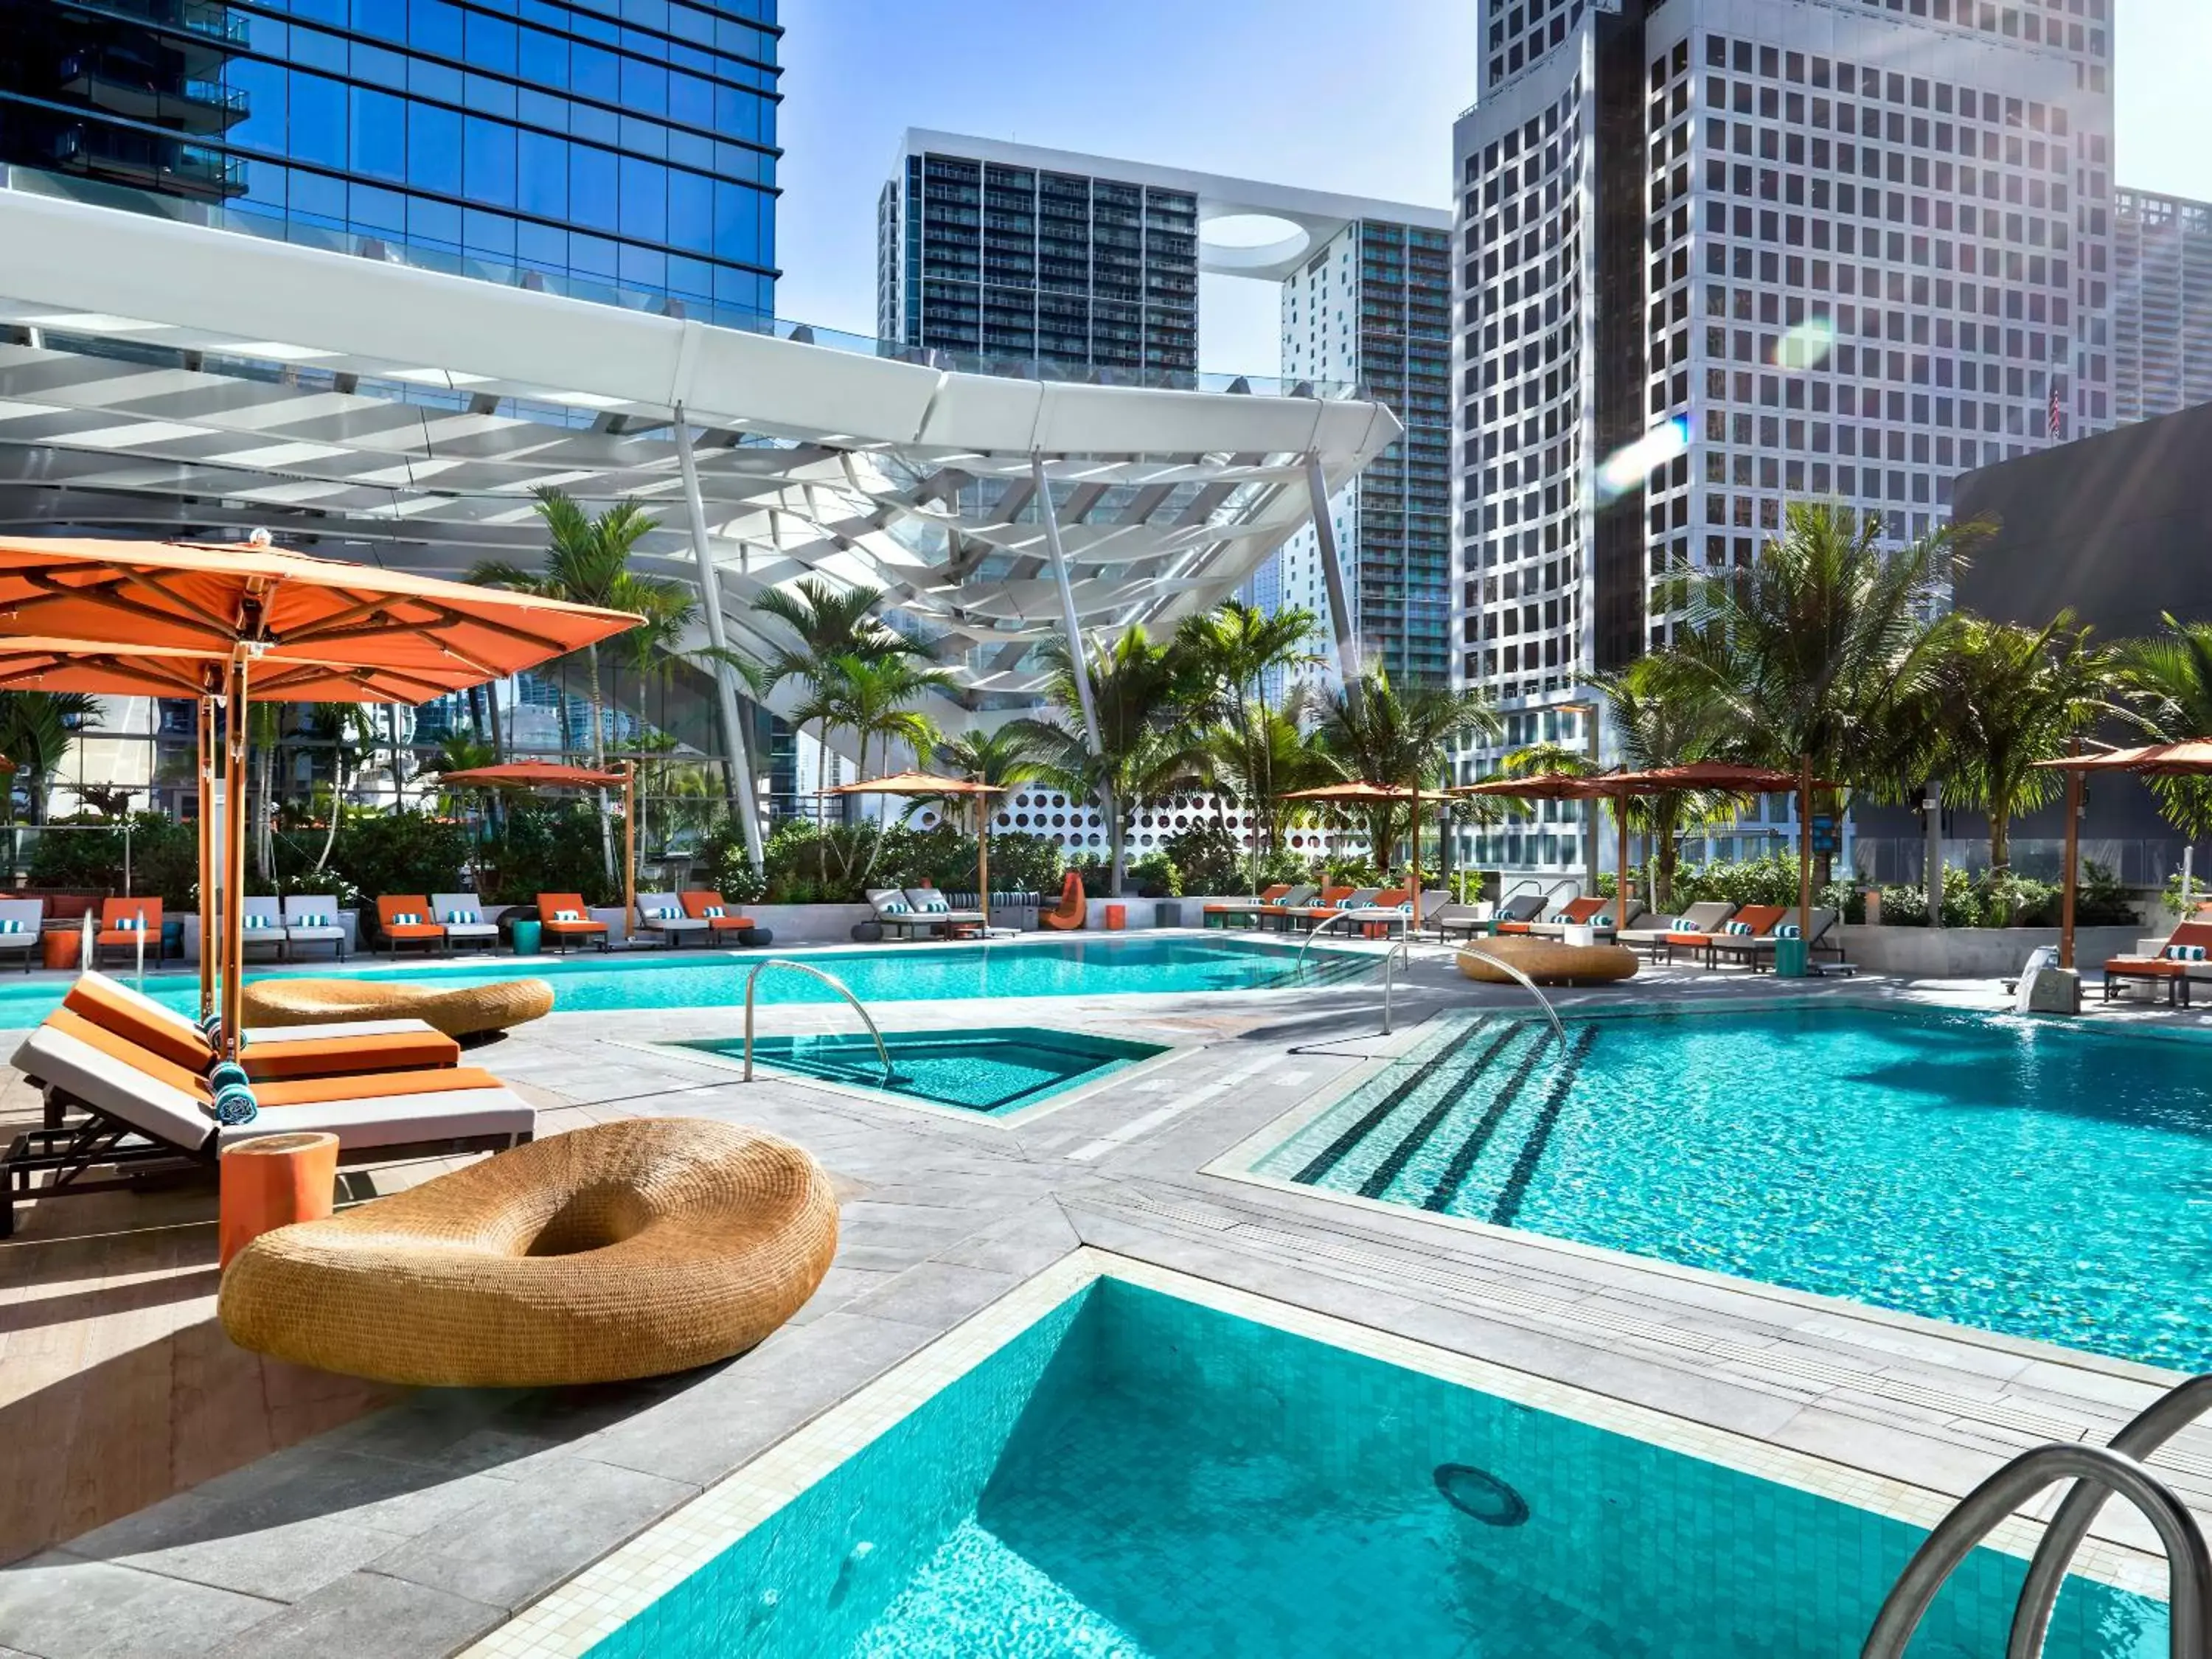 Swimming Pool in EAST Miami